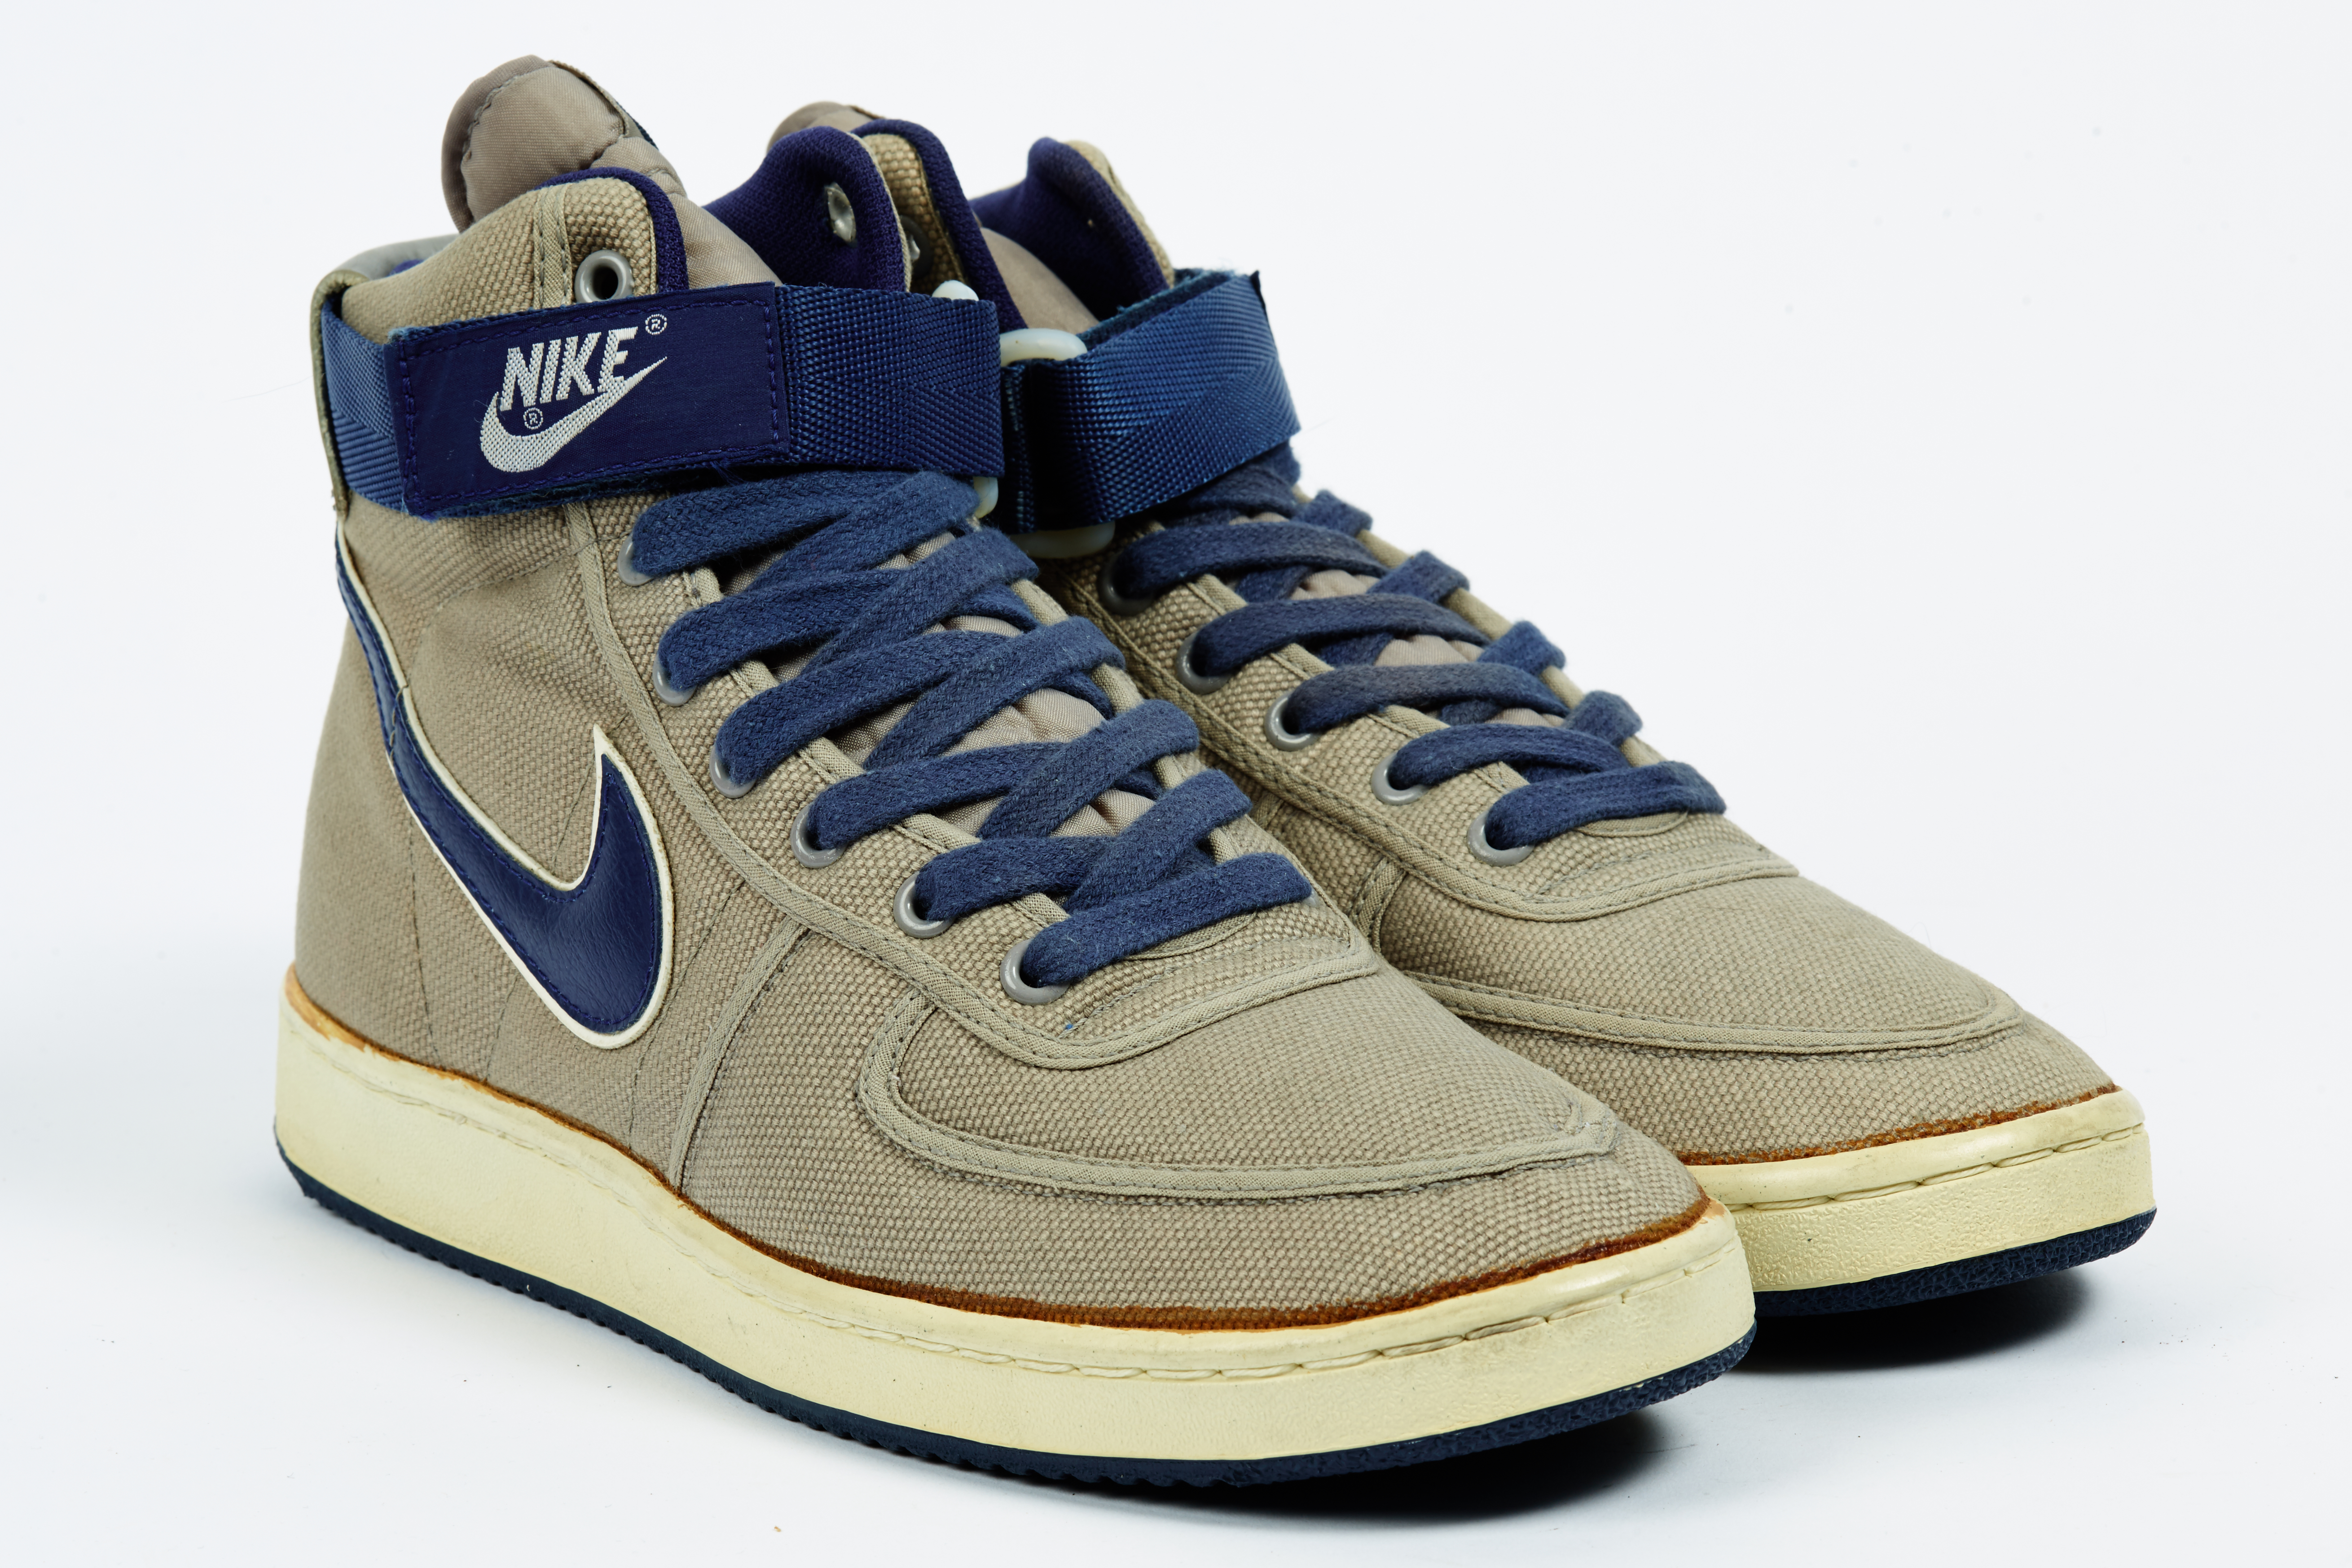 Vintage 1985 Nike Vandal - Shoes Your 